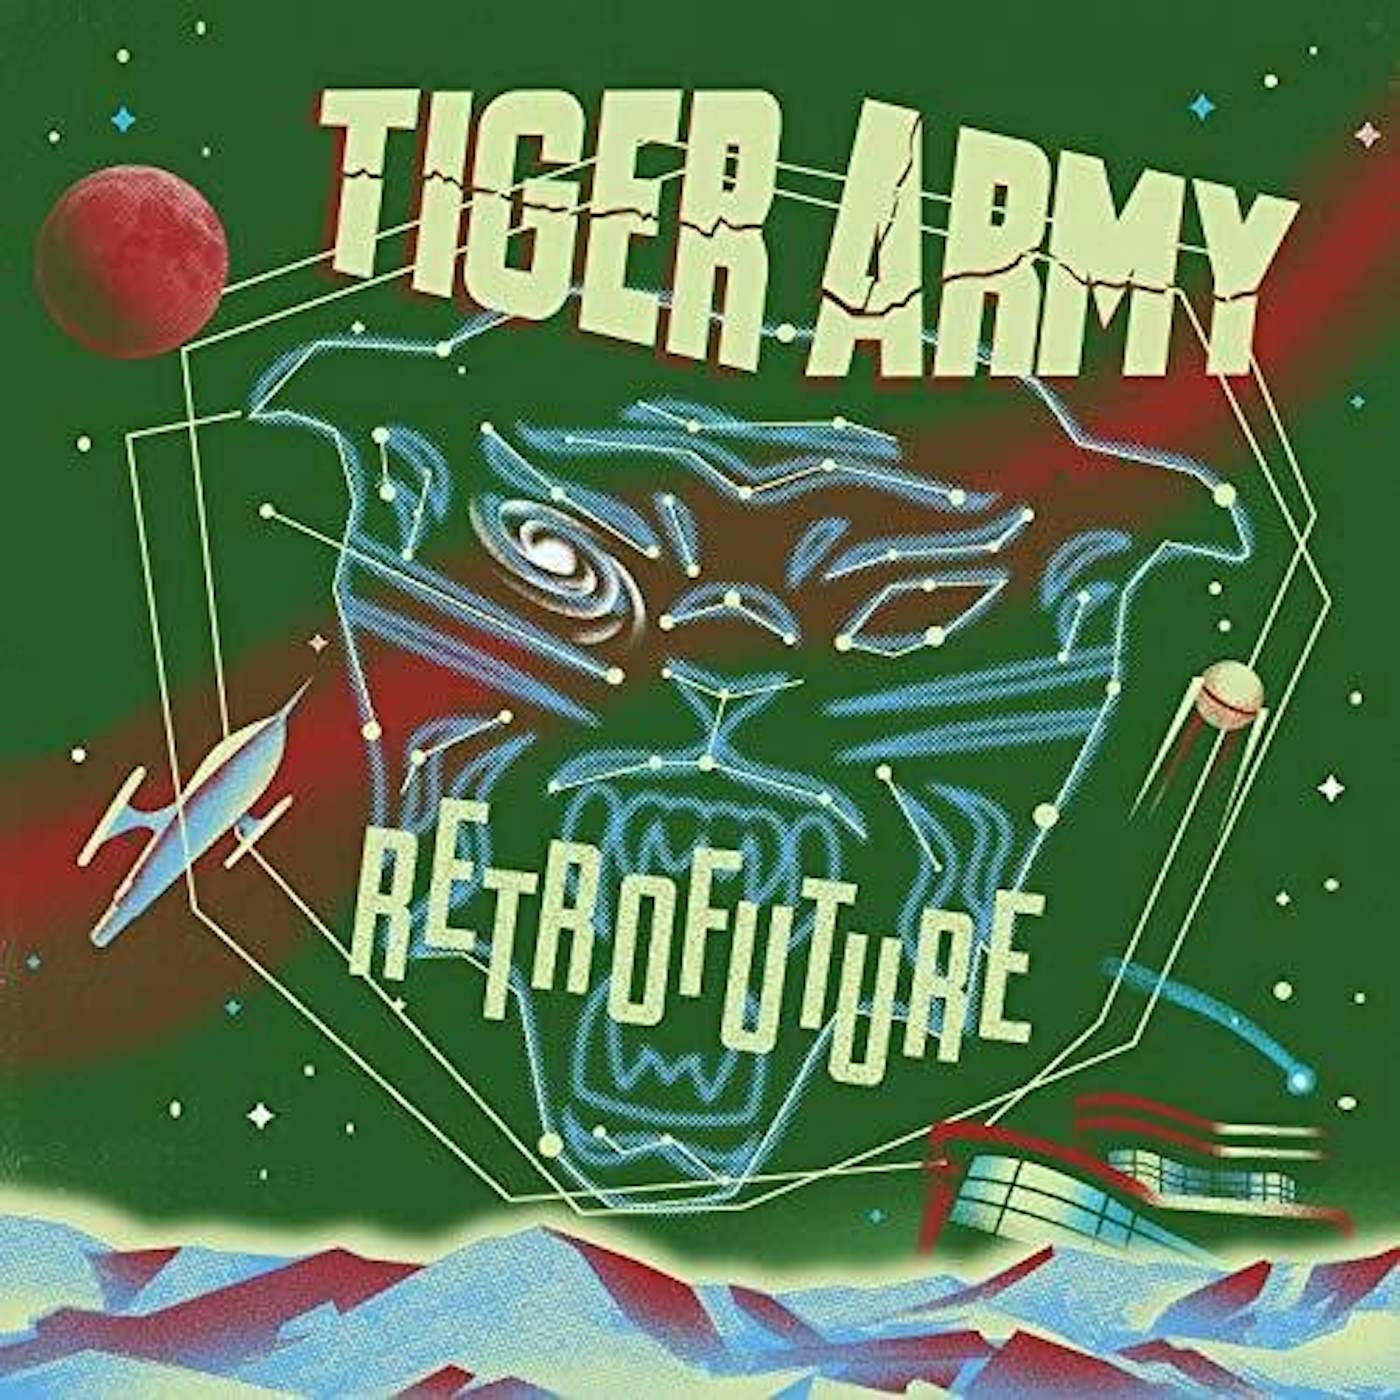 Tiger Army Retrofuture Vinyl Record